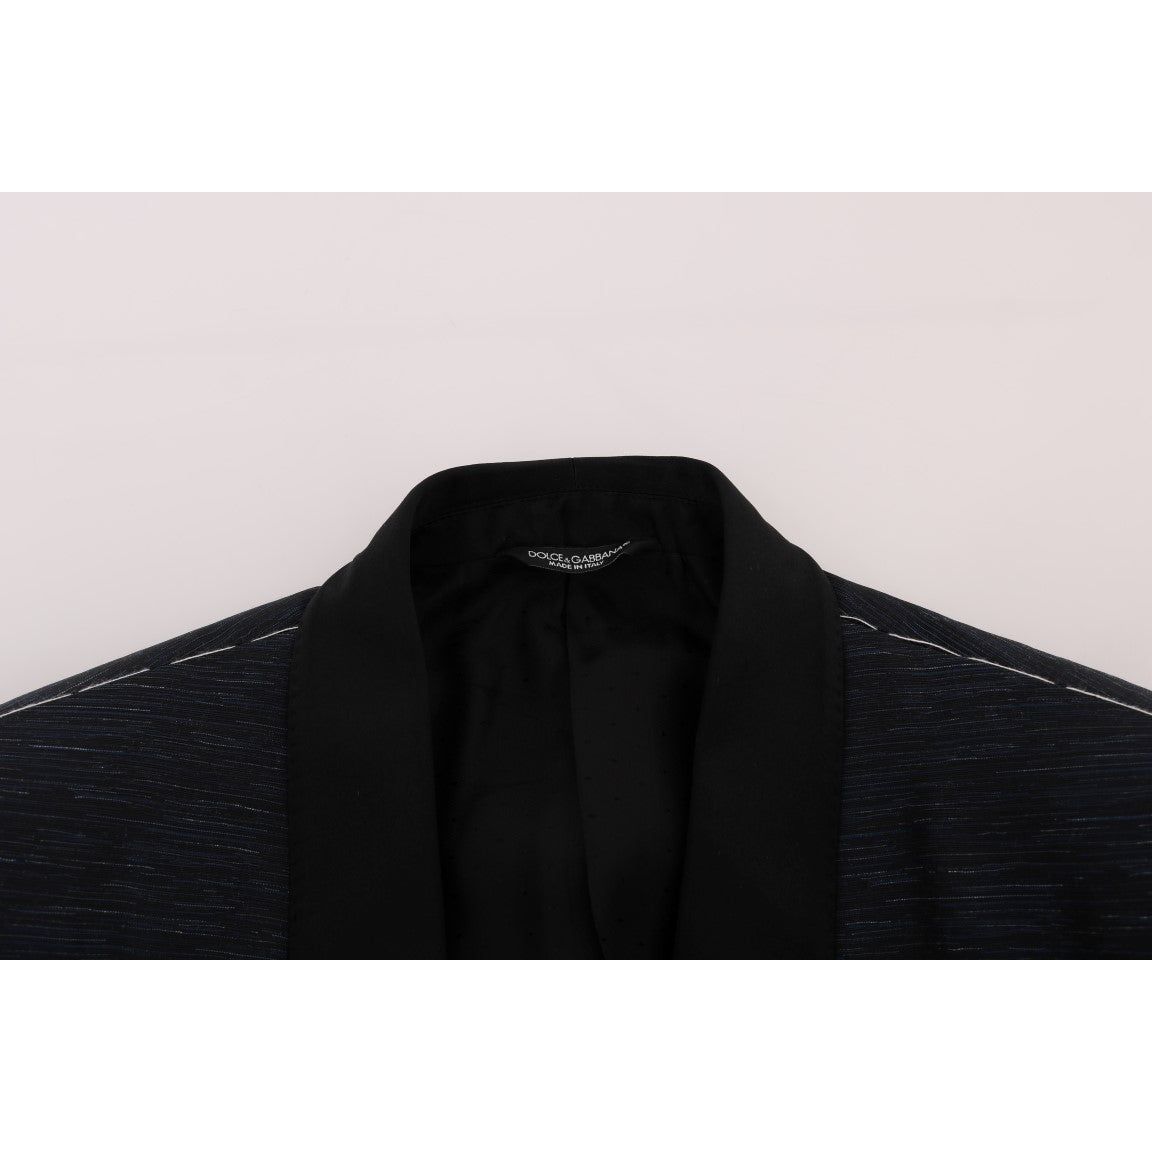 Dolce & Gabbana | Blue MARTINI Slim 2 Piece Blazer | McRichard Designer Brands